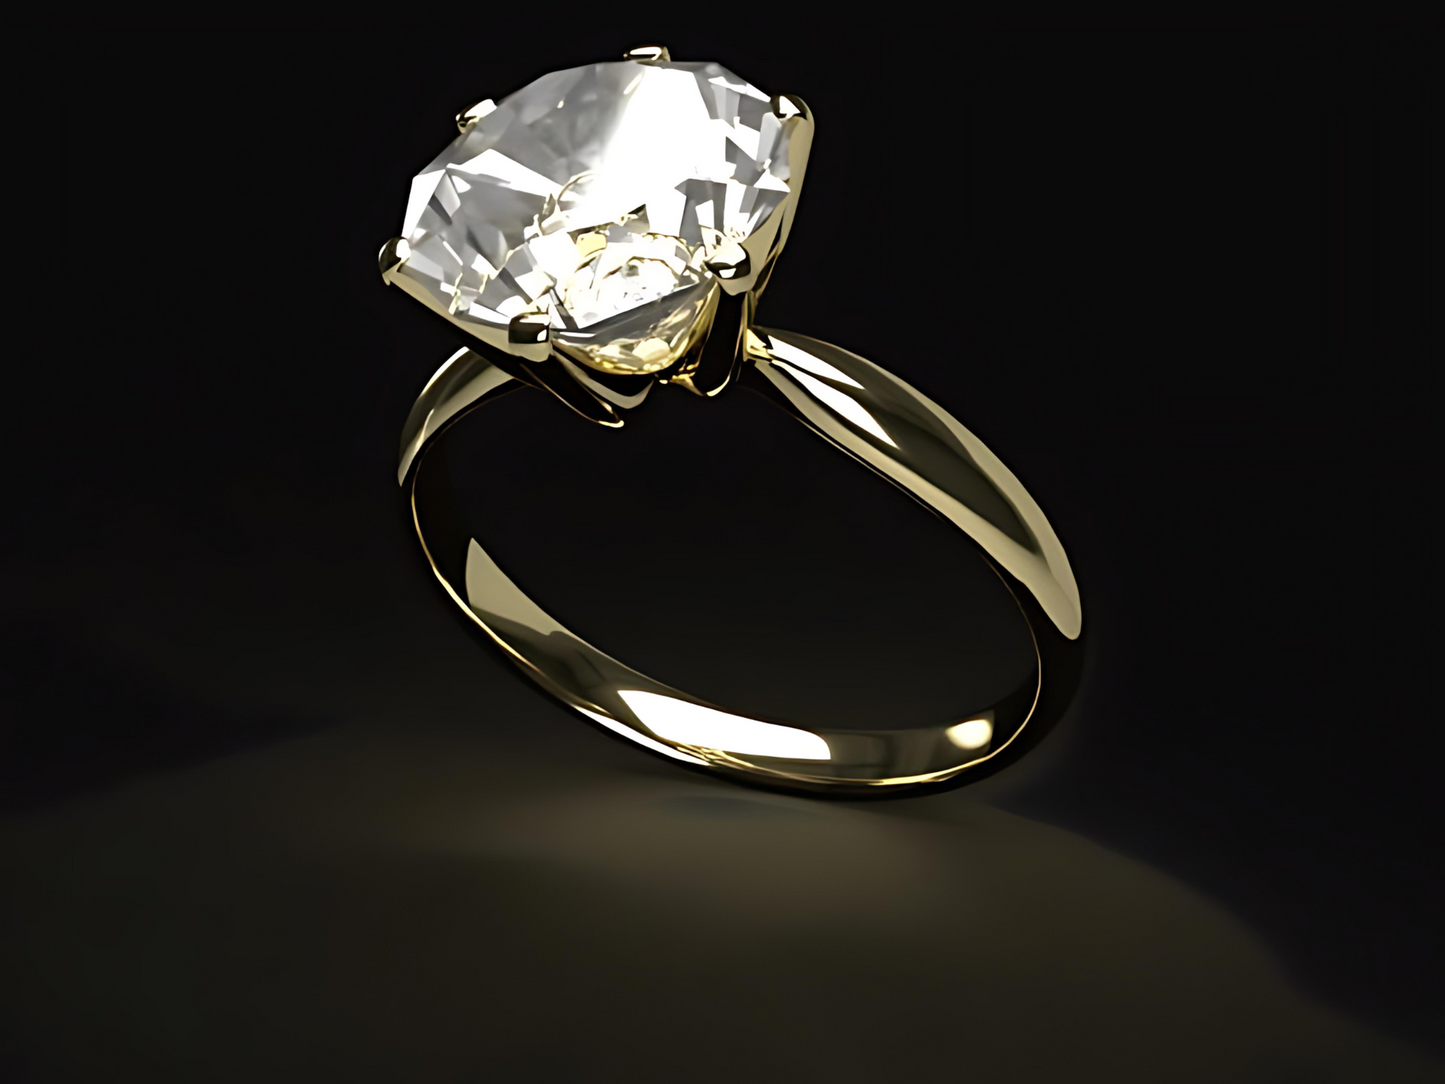 Handmade 18K gold ring with natural Vs high quality Diamond. IGI certificate.